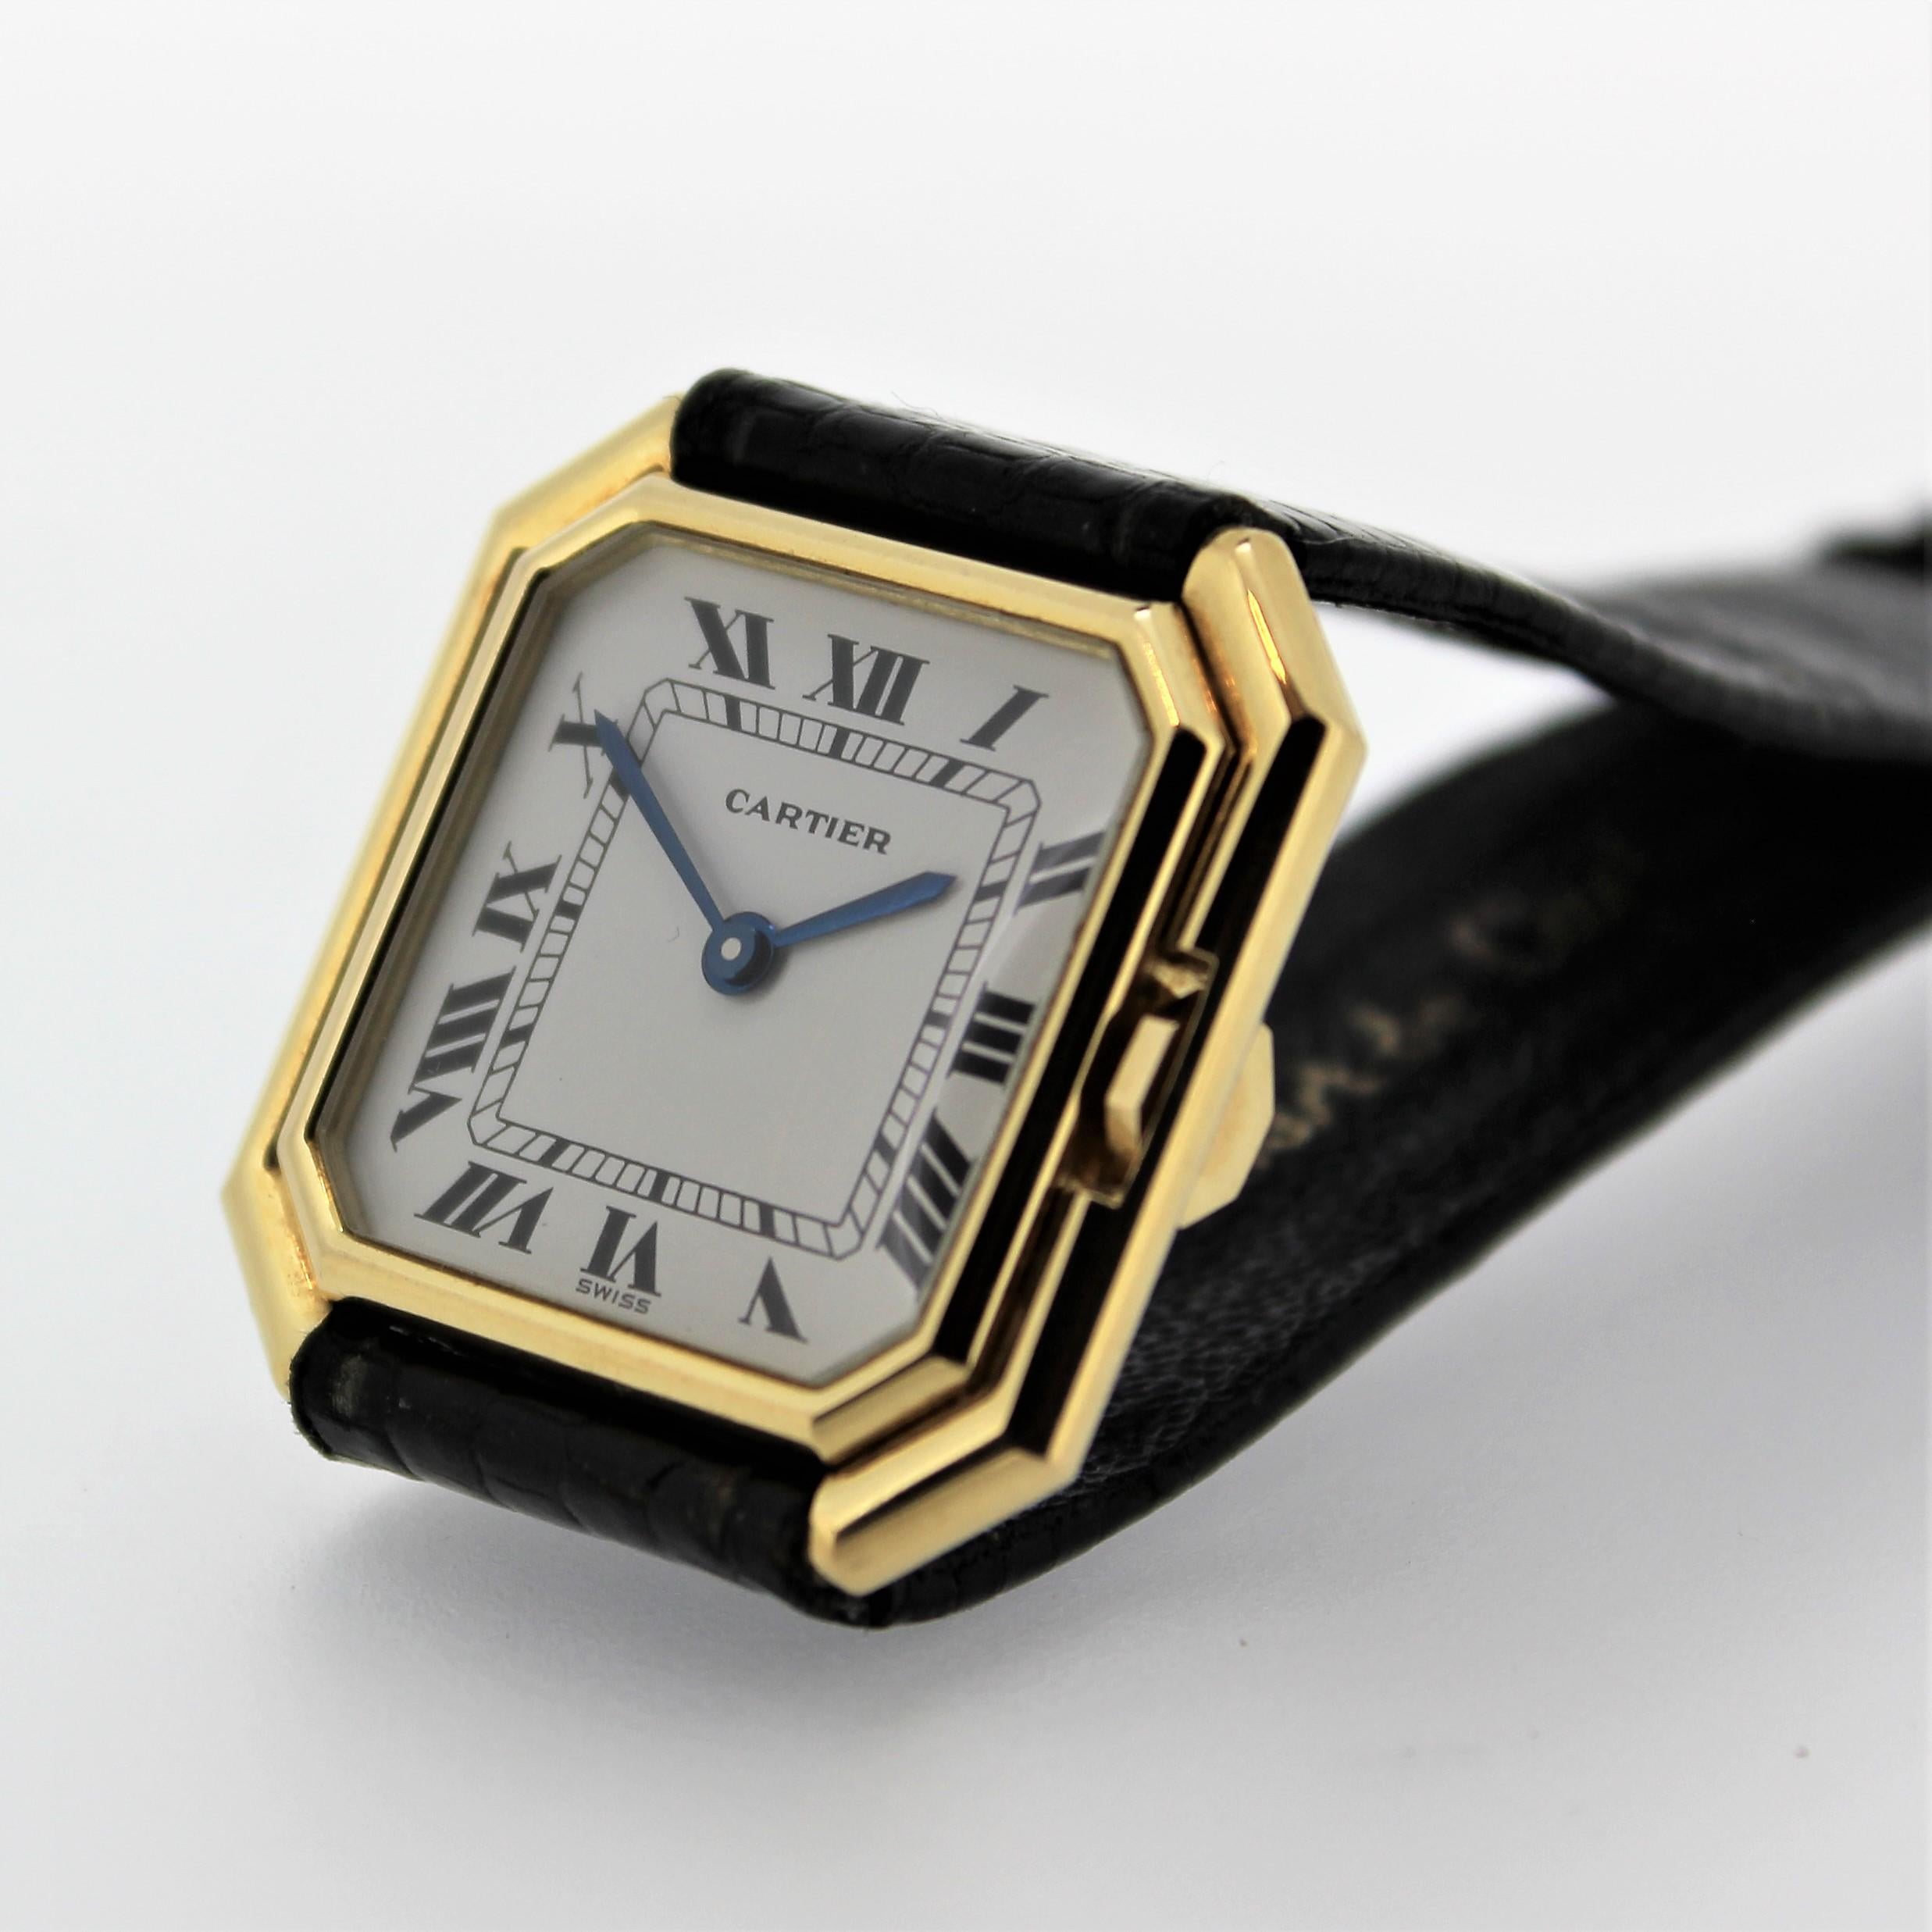 vintage cartier watch